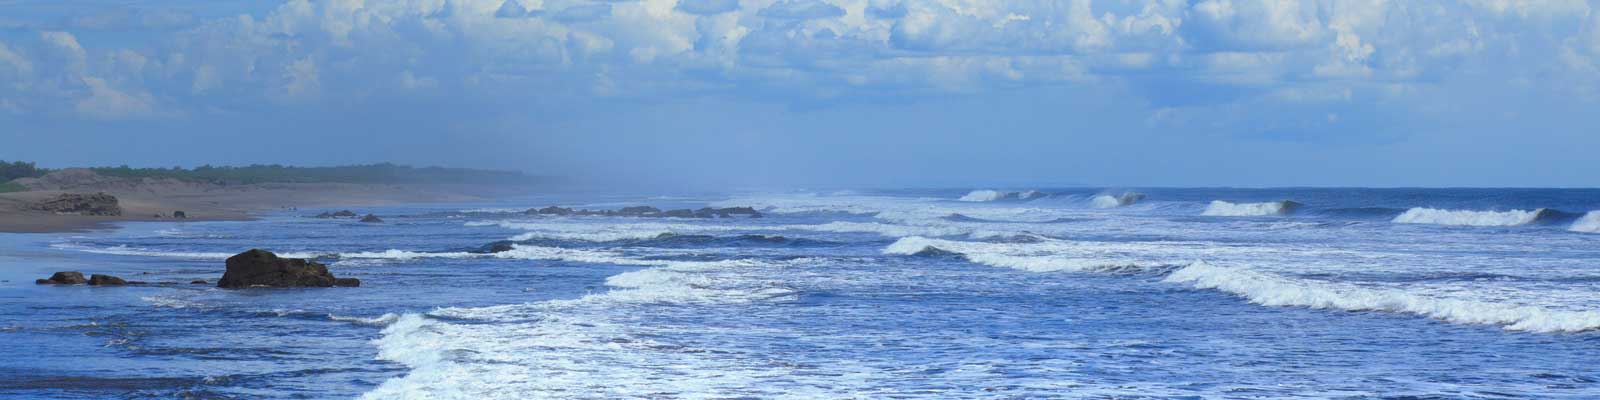 Nicaragua Praias Oceanos Comprar, Vender, Alugar, Casas, Apartamentos, Residencias.